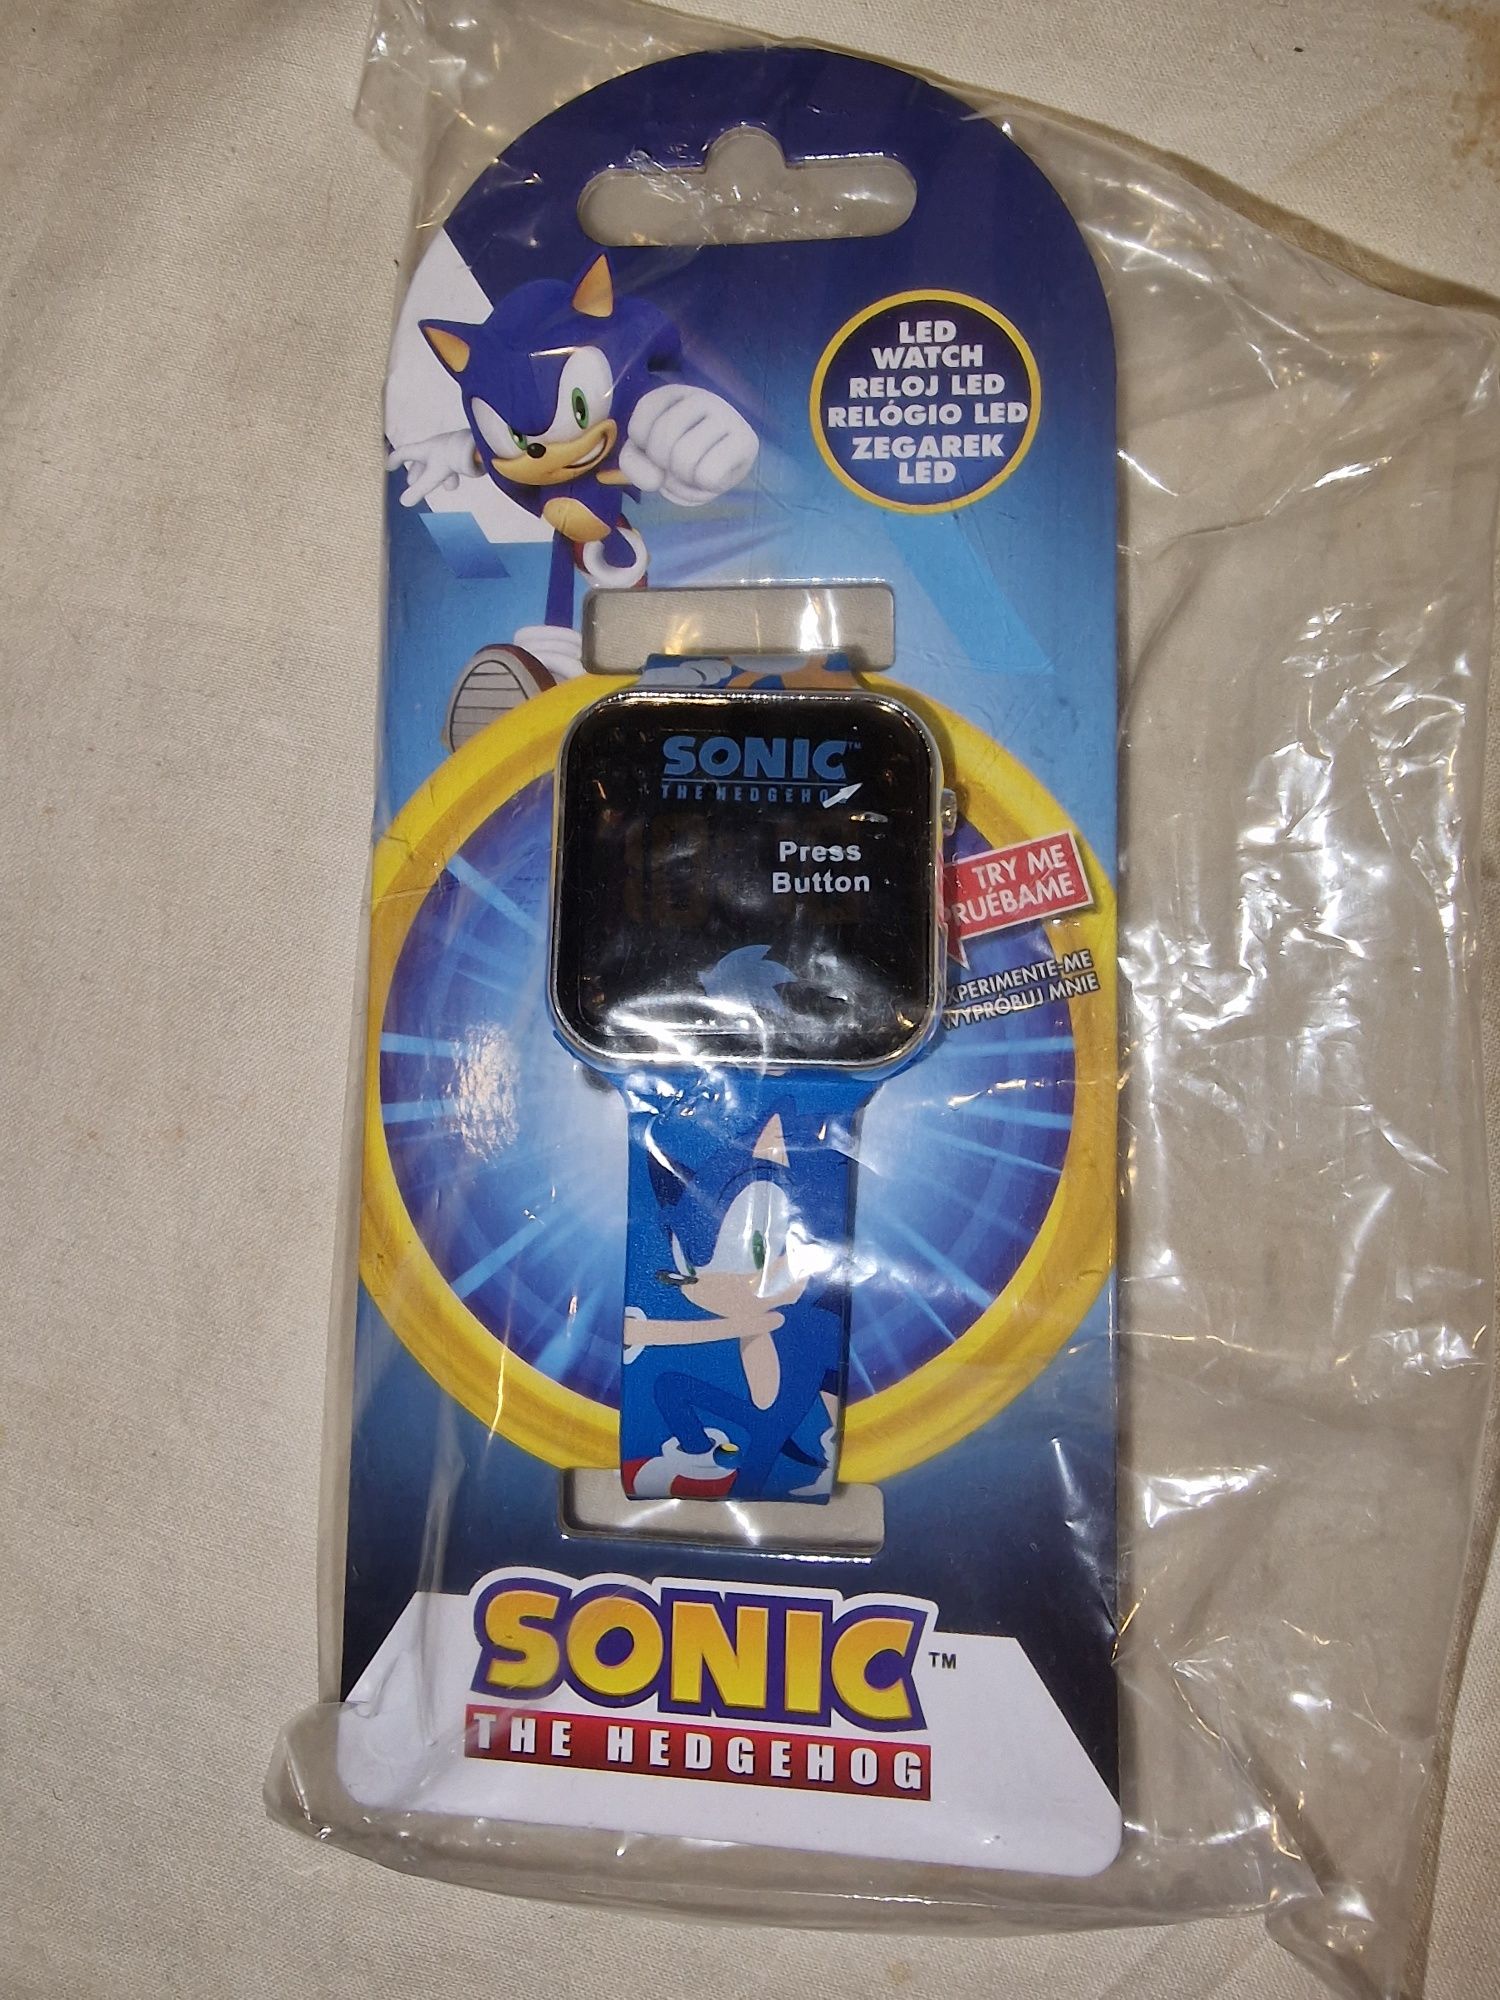 Relógio digital led Sonic